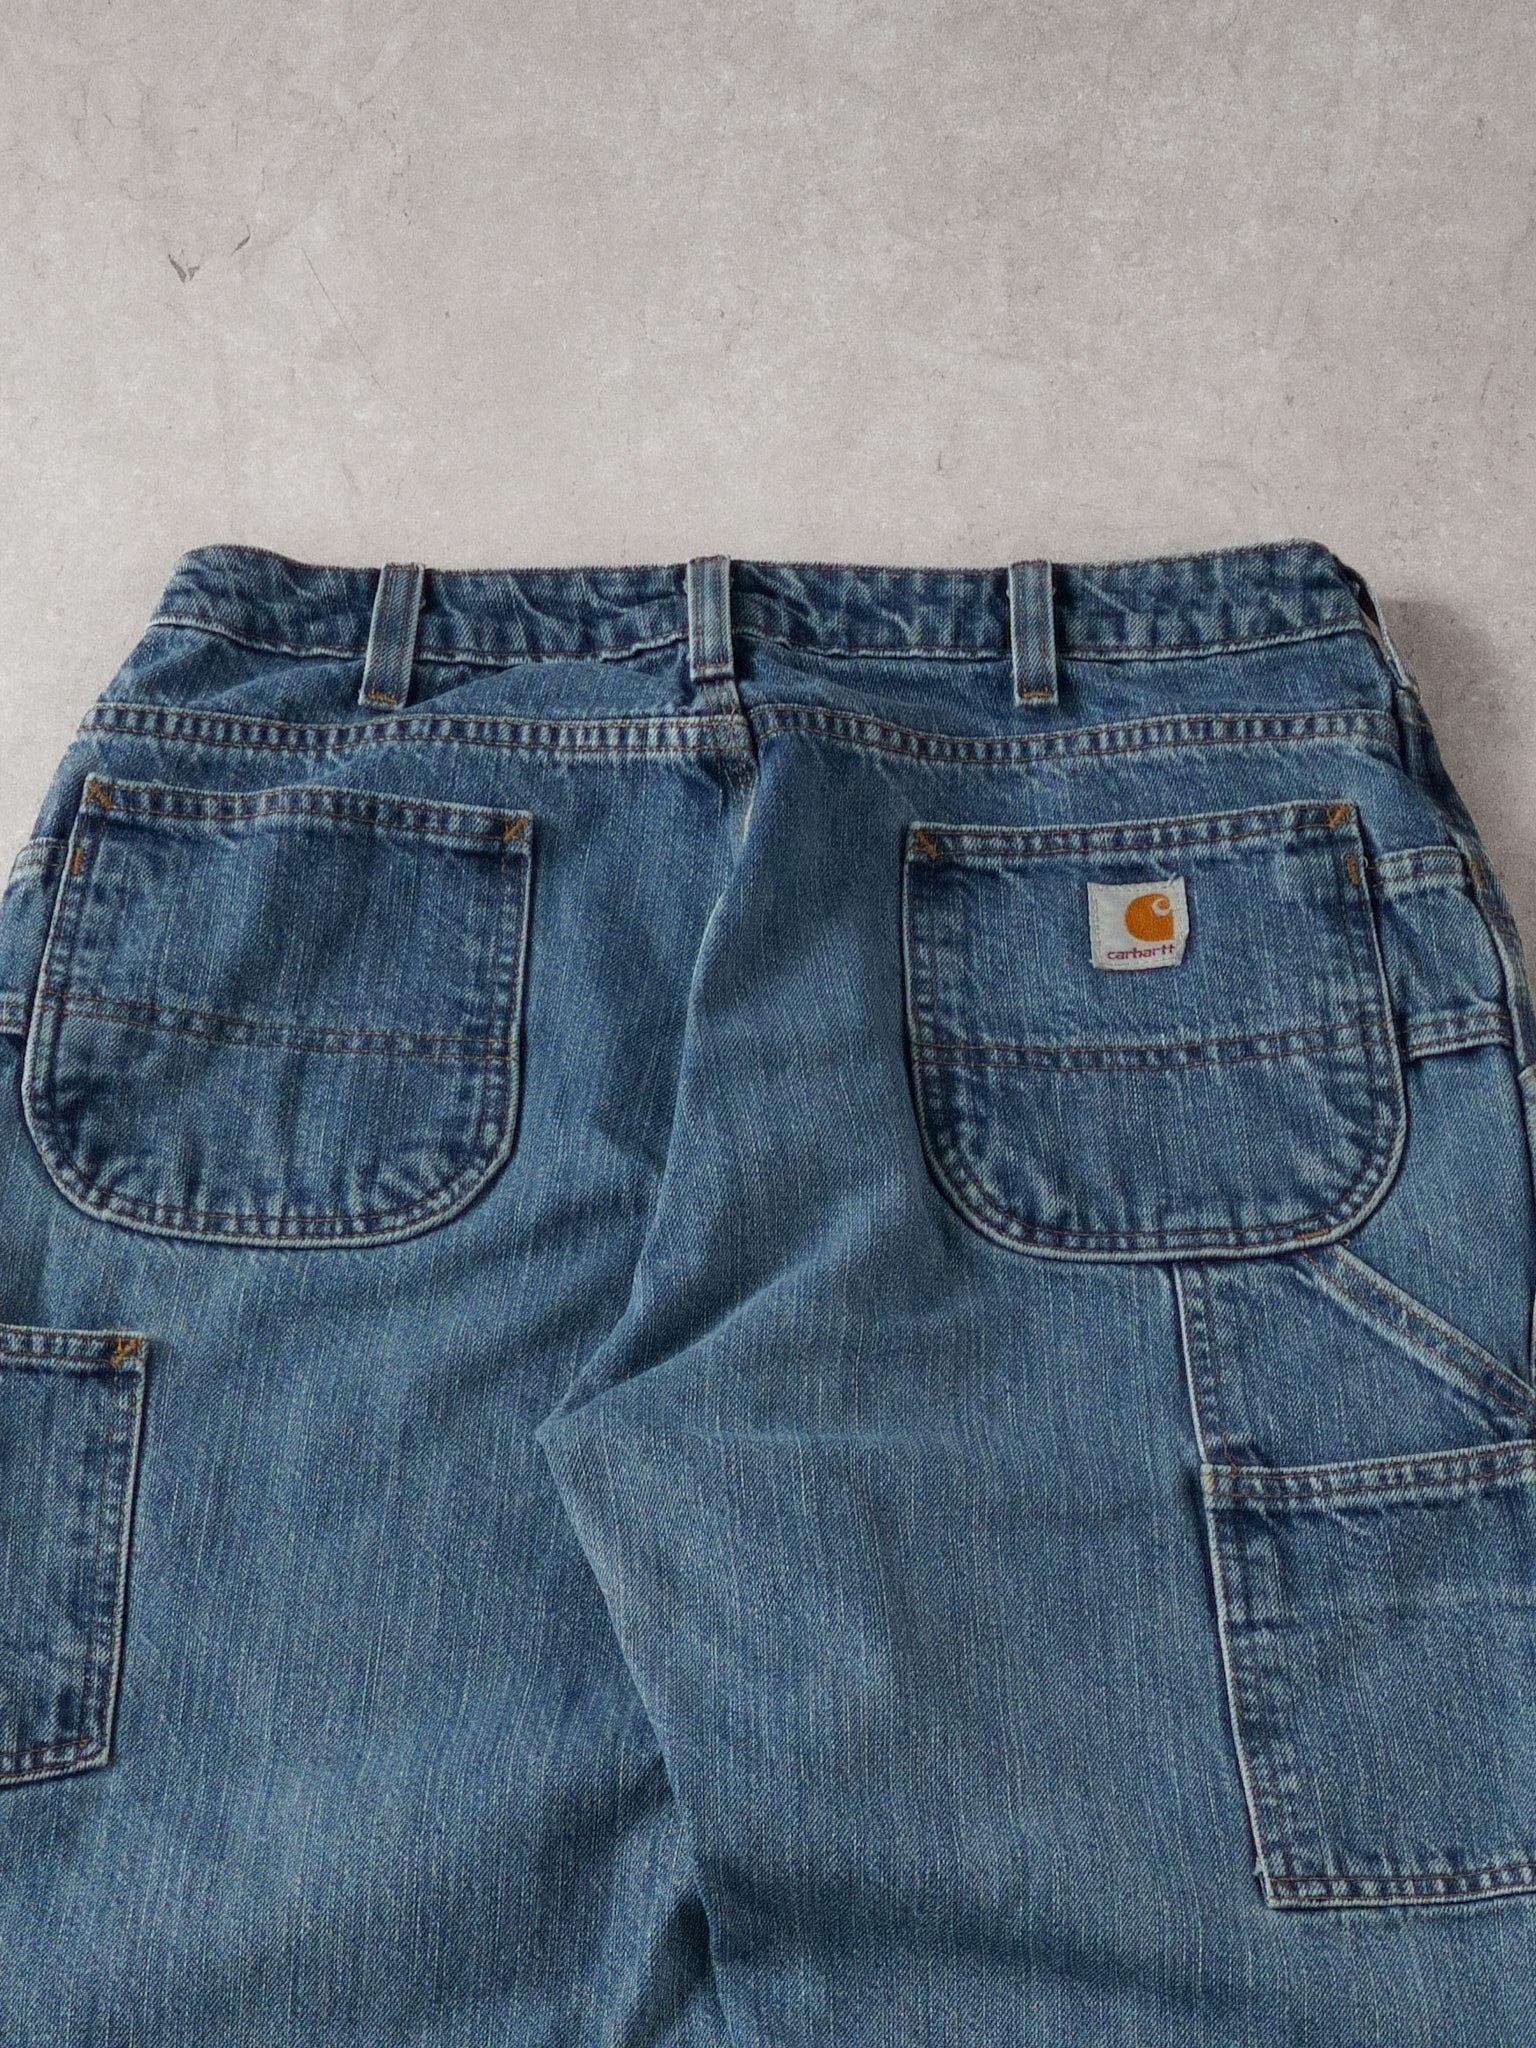 Vintage 90s Blue Carhartt Denim Carpenter Pants (30x32)